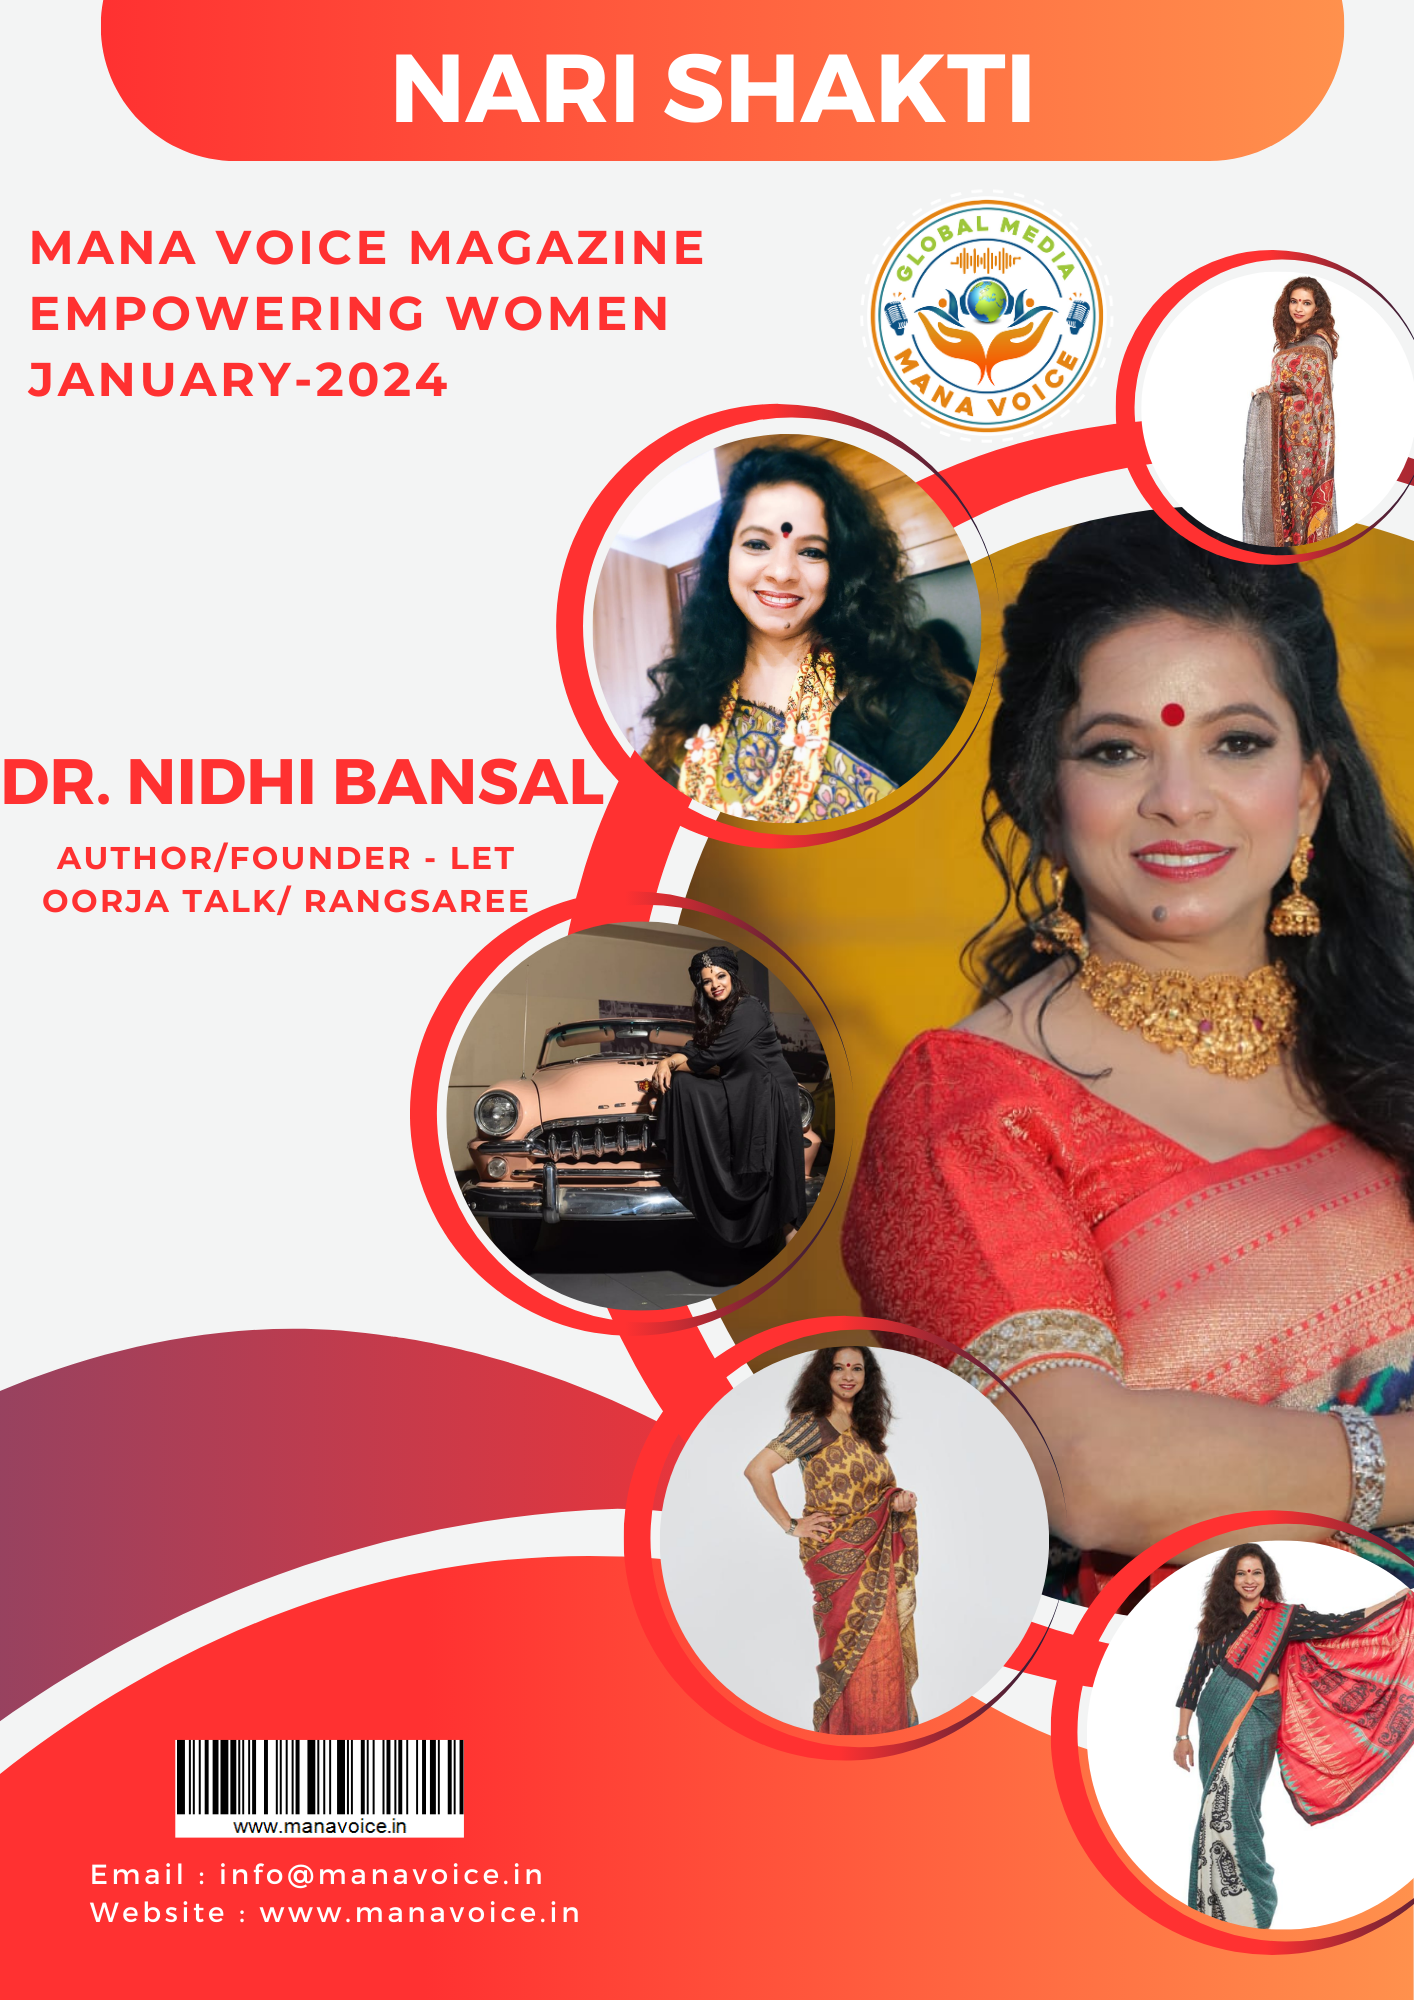 Nidhi Bansal: A Tapestry of Talent and Triumph | Nari Shakti - Empowering Women | Mana Voice